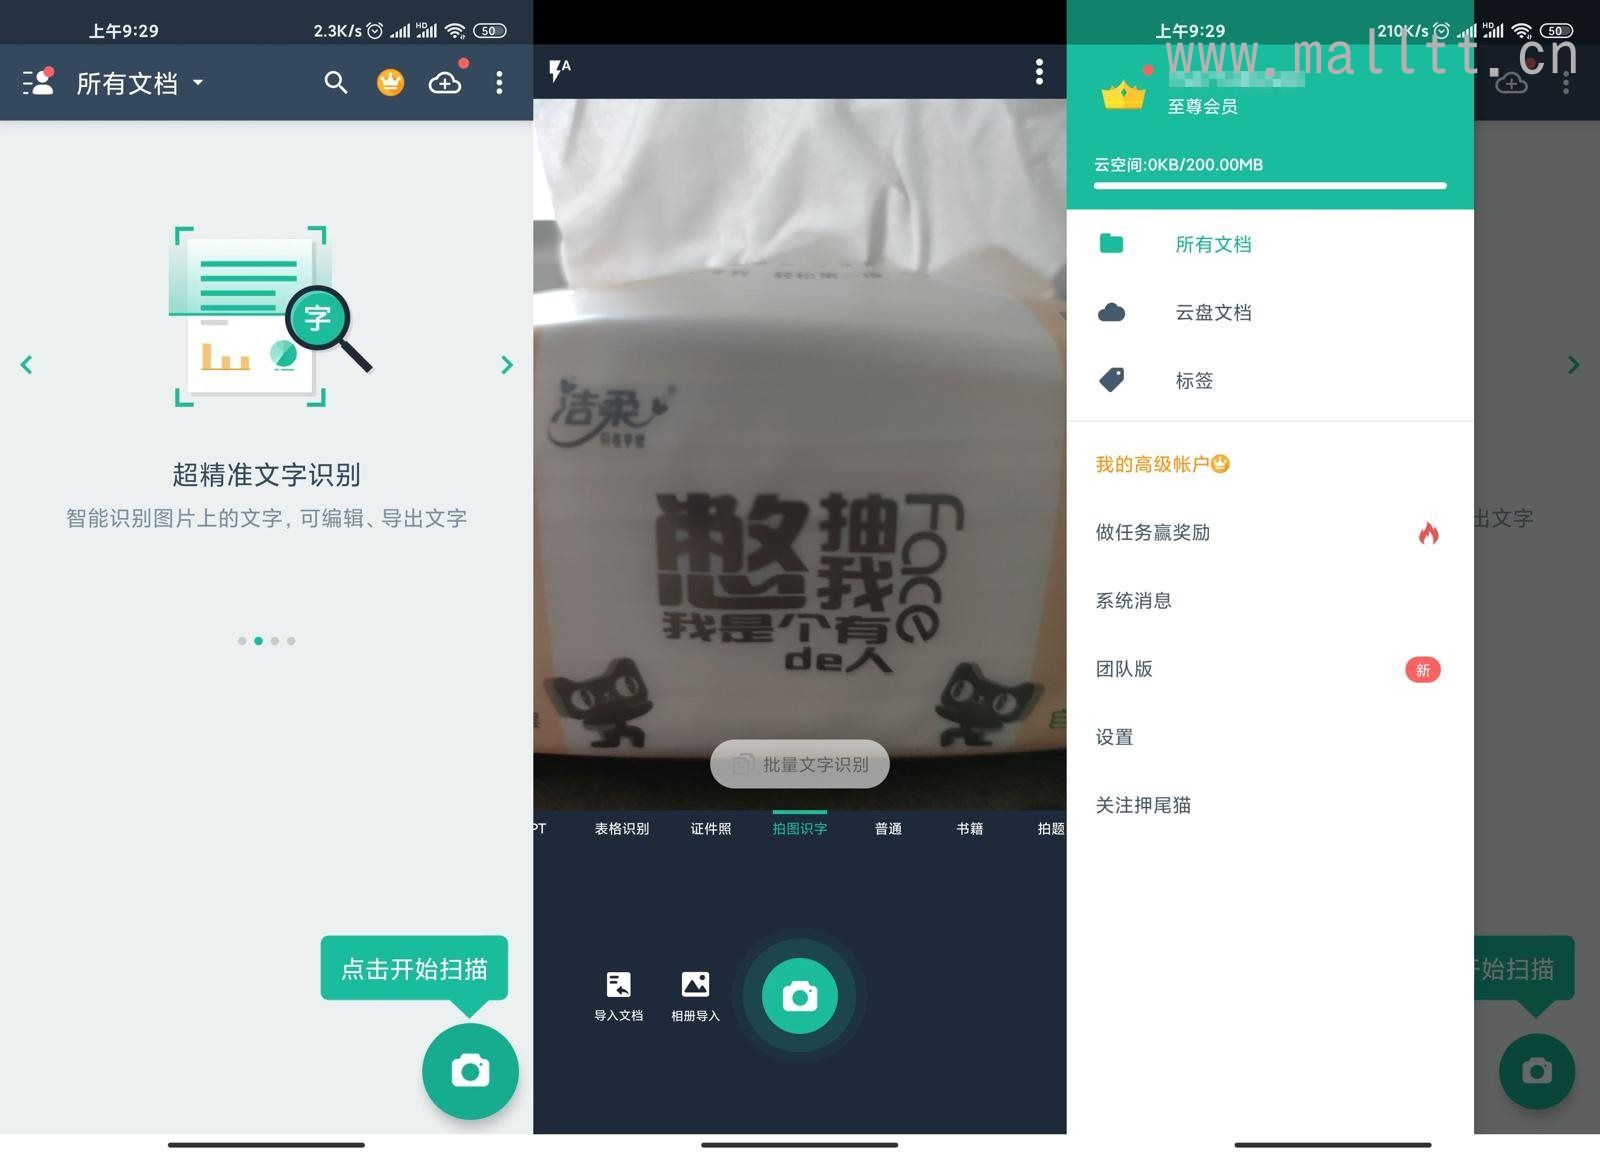 Android 扫描全能王_v6.5.5(2111250000) 解锁高级版